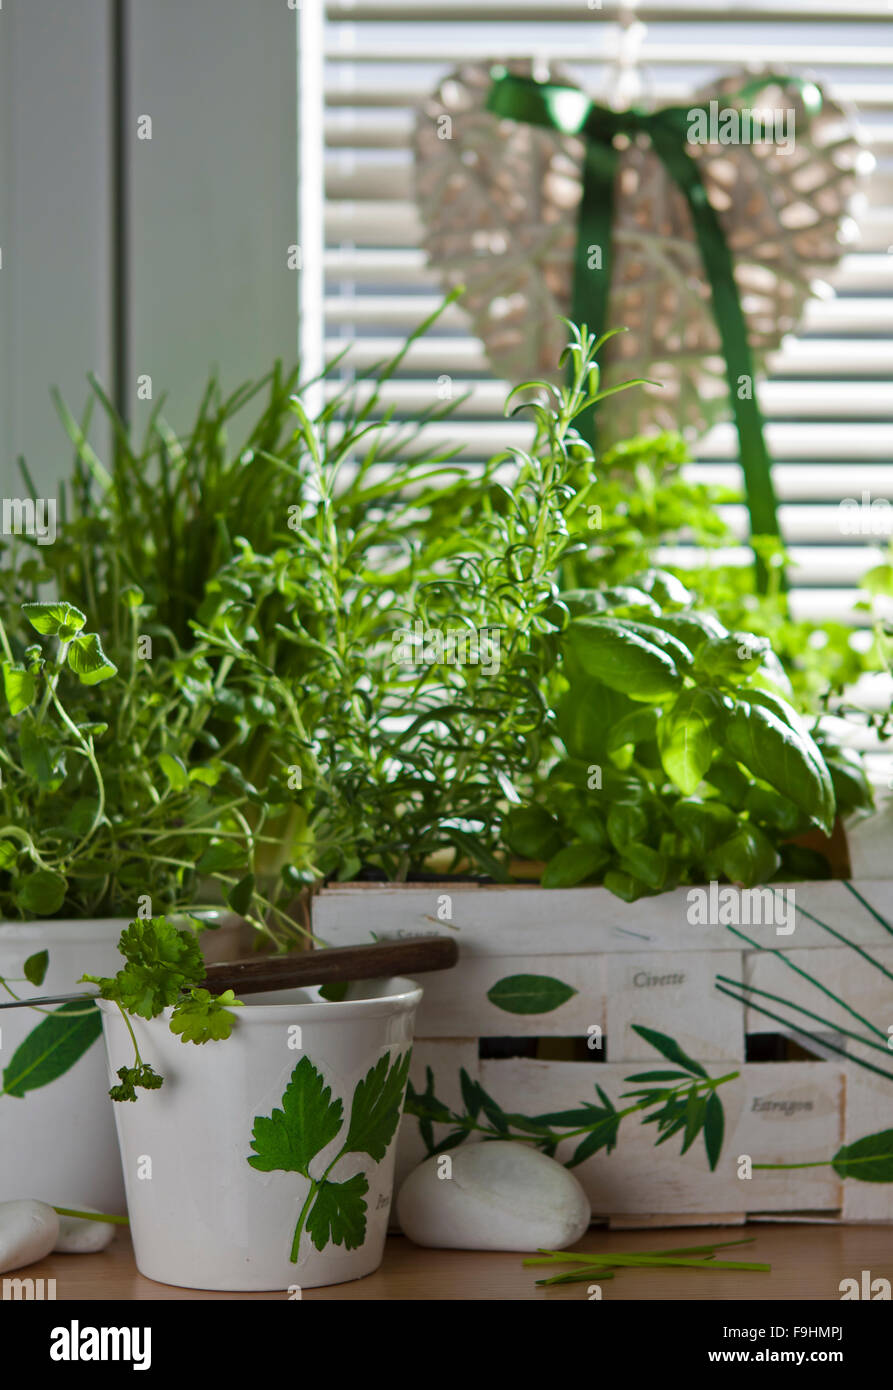 decoupage motive with herbs Stock Photo